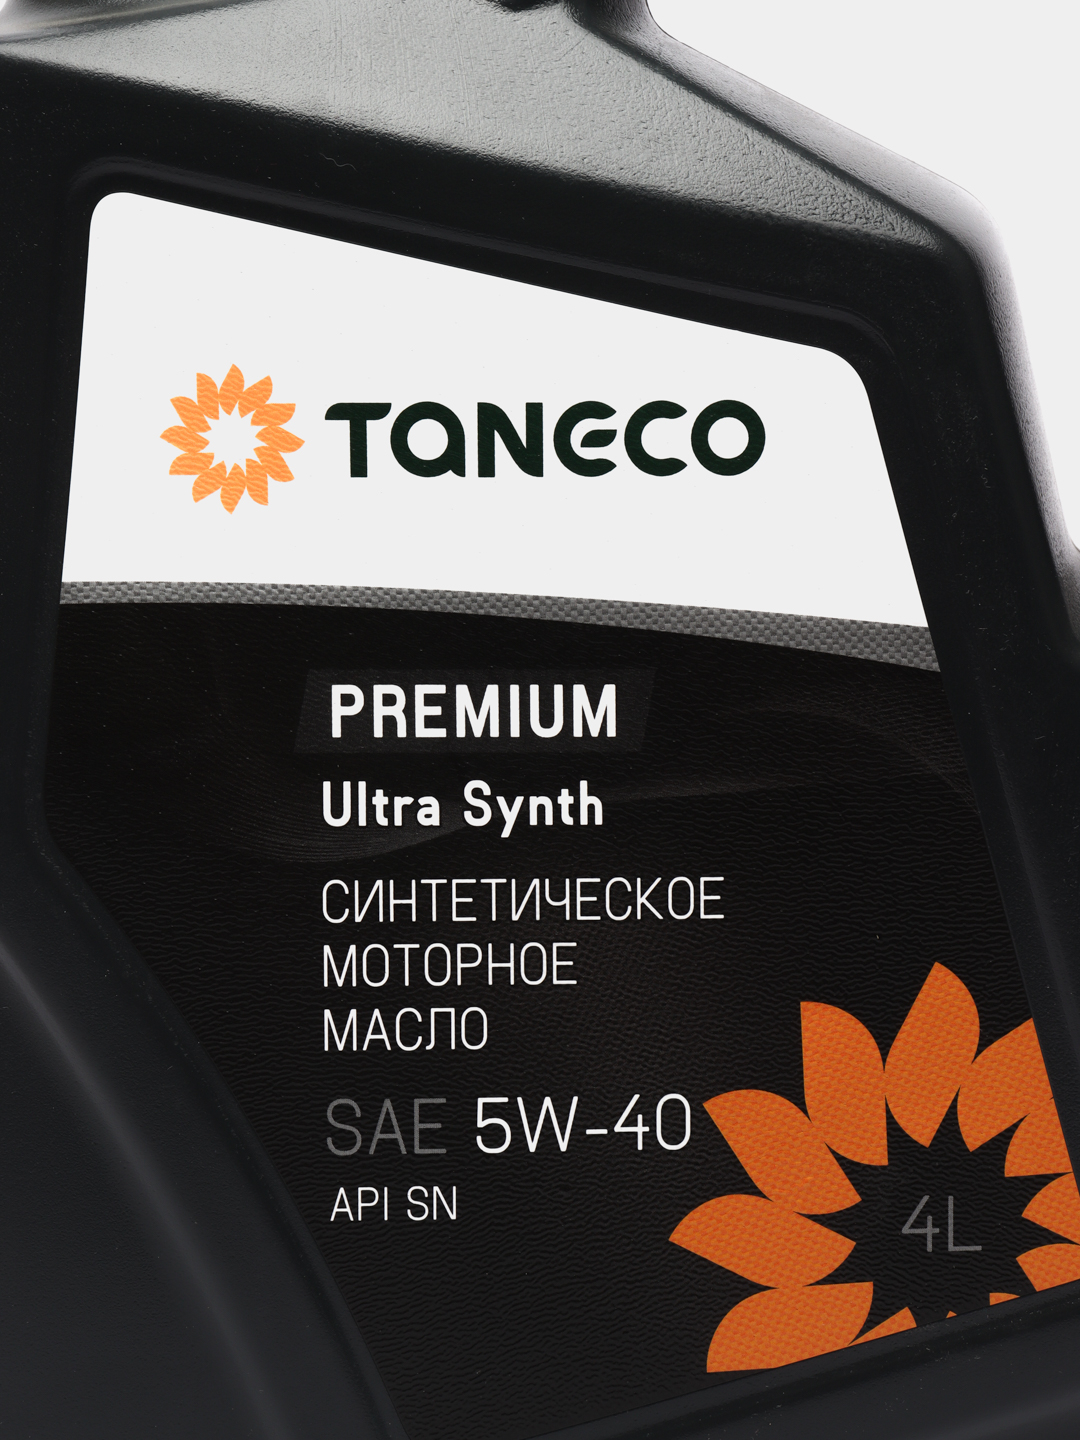 Масло ultra synth. Taneco Premium Ultra Synth 5w-40. Масло Taneco Premium Ultra. Taneco Premium Ultra Synth SAE 5w-40 купить.